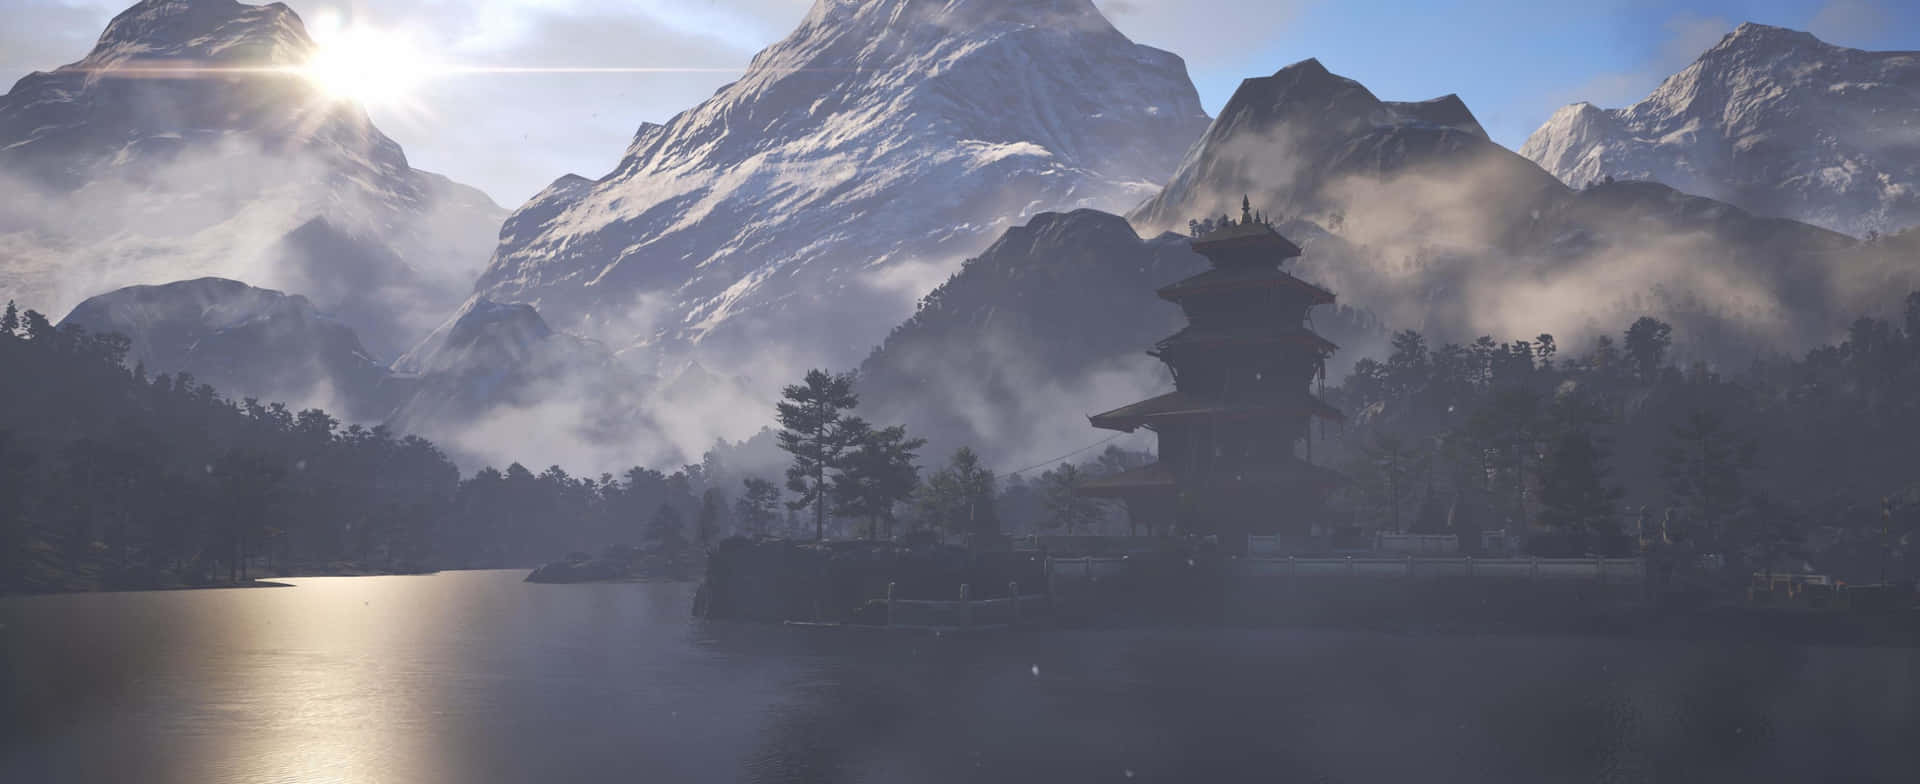 A Mountain Scene With A Pagoda And A Lake